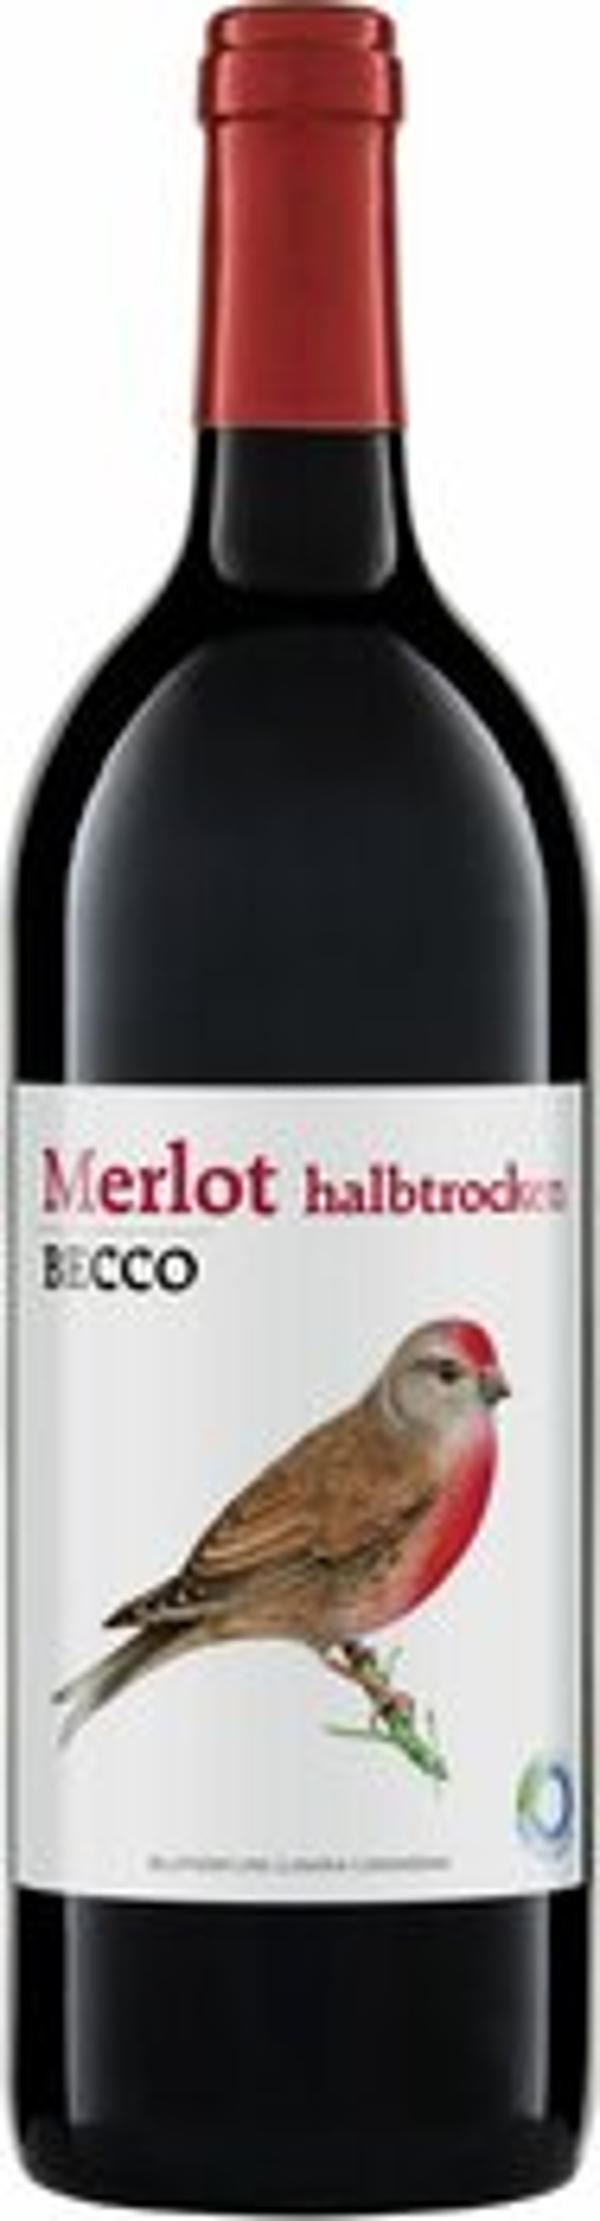 Produktfoto zu BECCO Merlot halbtrocken 2017